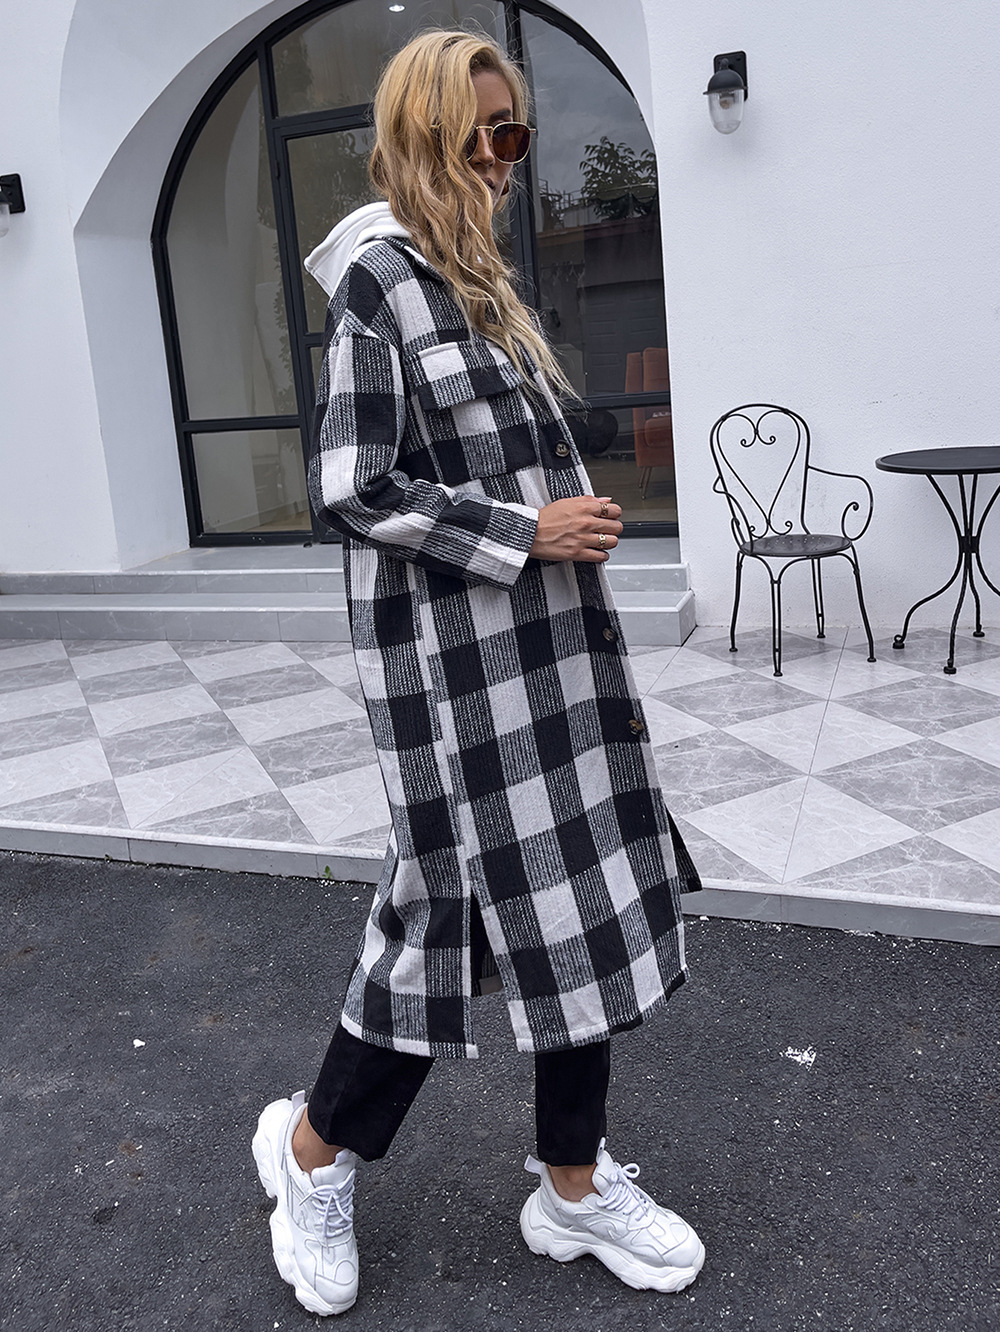 Autumn lapel coat black-white windbreaker for women